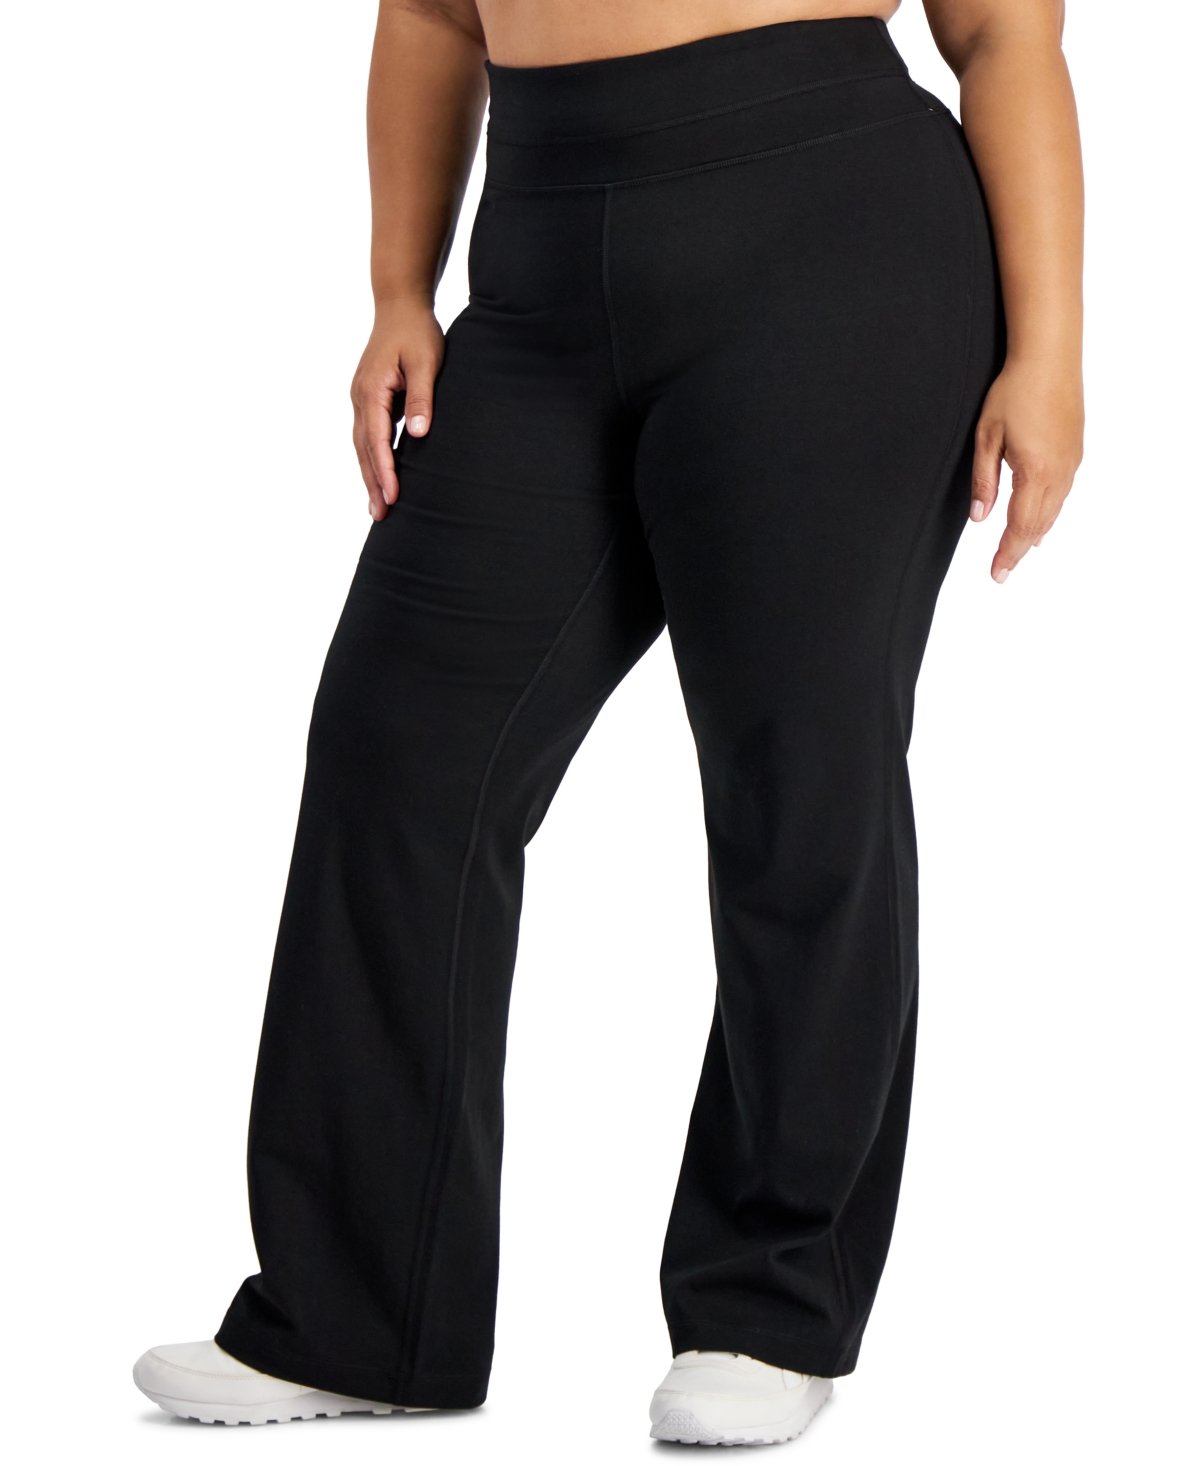 Plus Size Flex Stretch Active Yoga Pants, Created for Macy's - Black